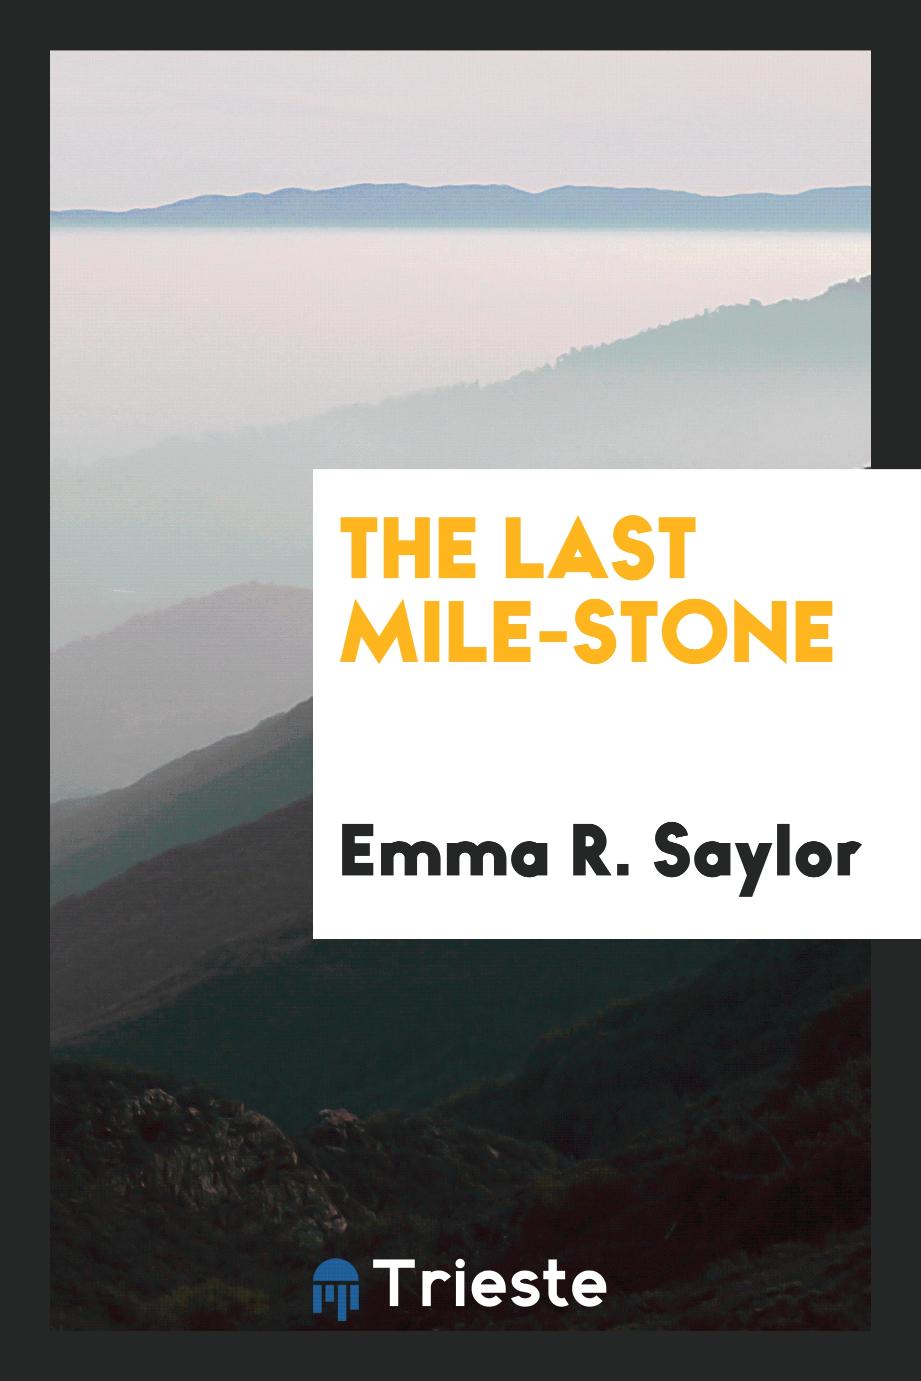 The last mile-stone